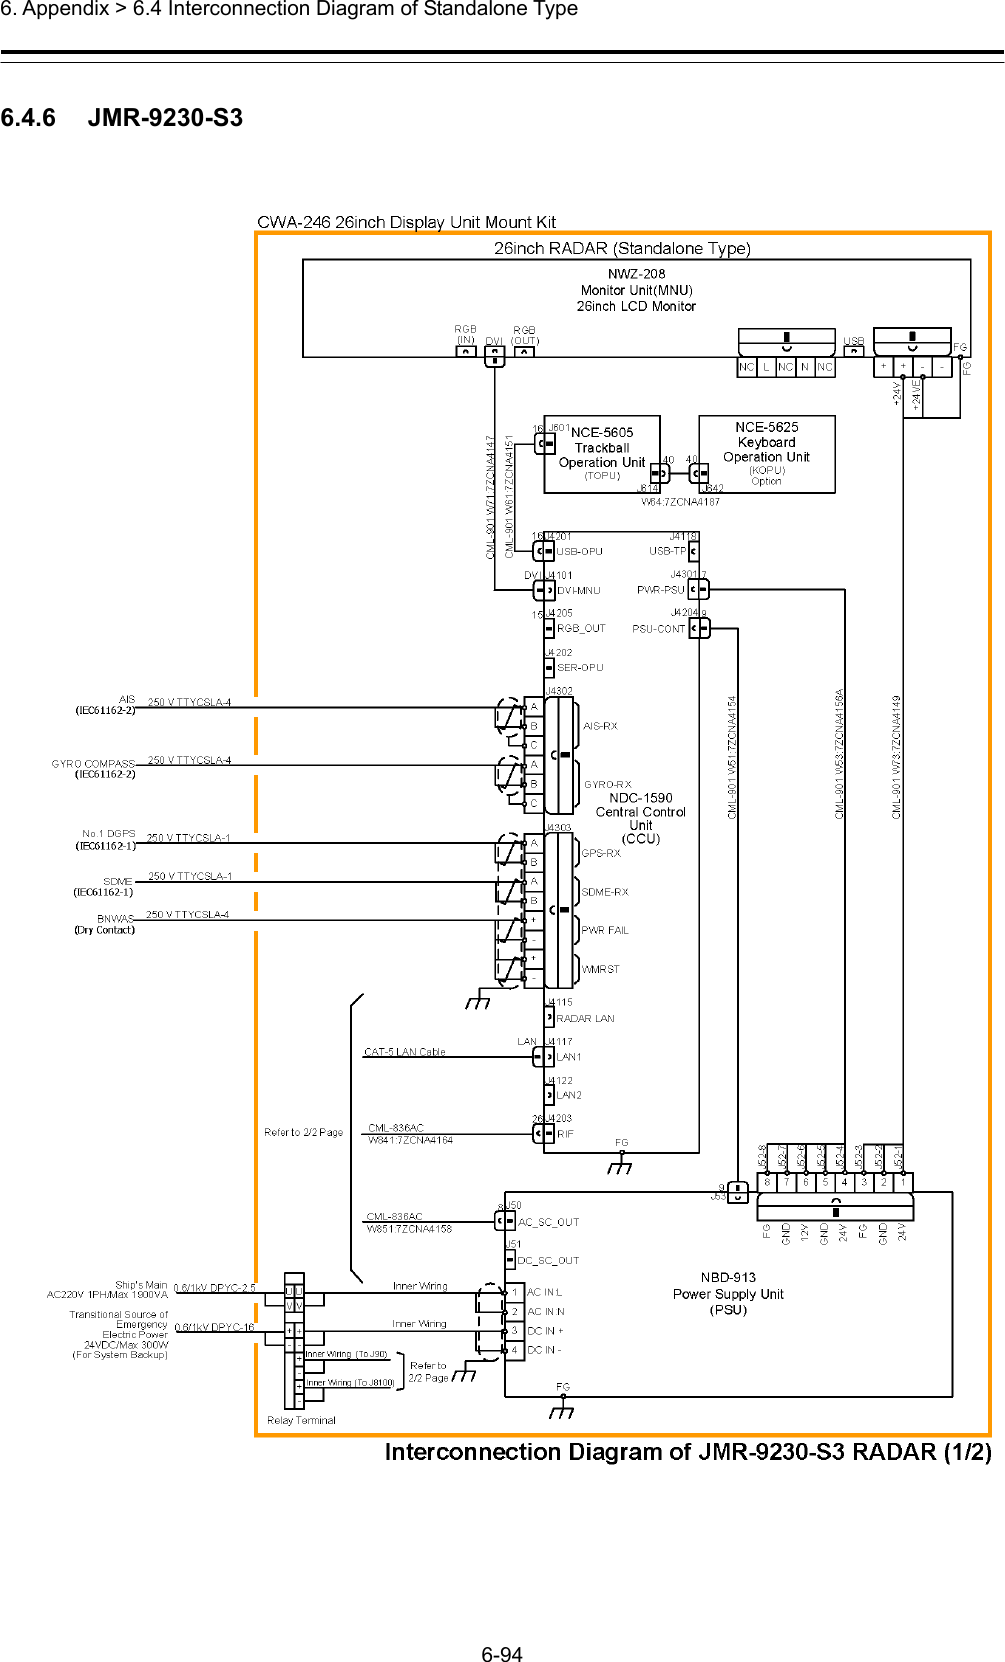  6. Appendix &gt; 6.4 Interconnection Diagram of Standalone Type 6-94  6.4.6   JMR-9230-S3 